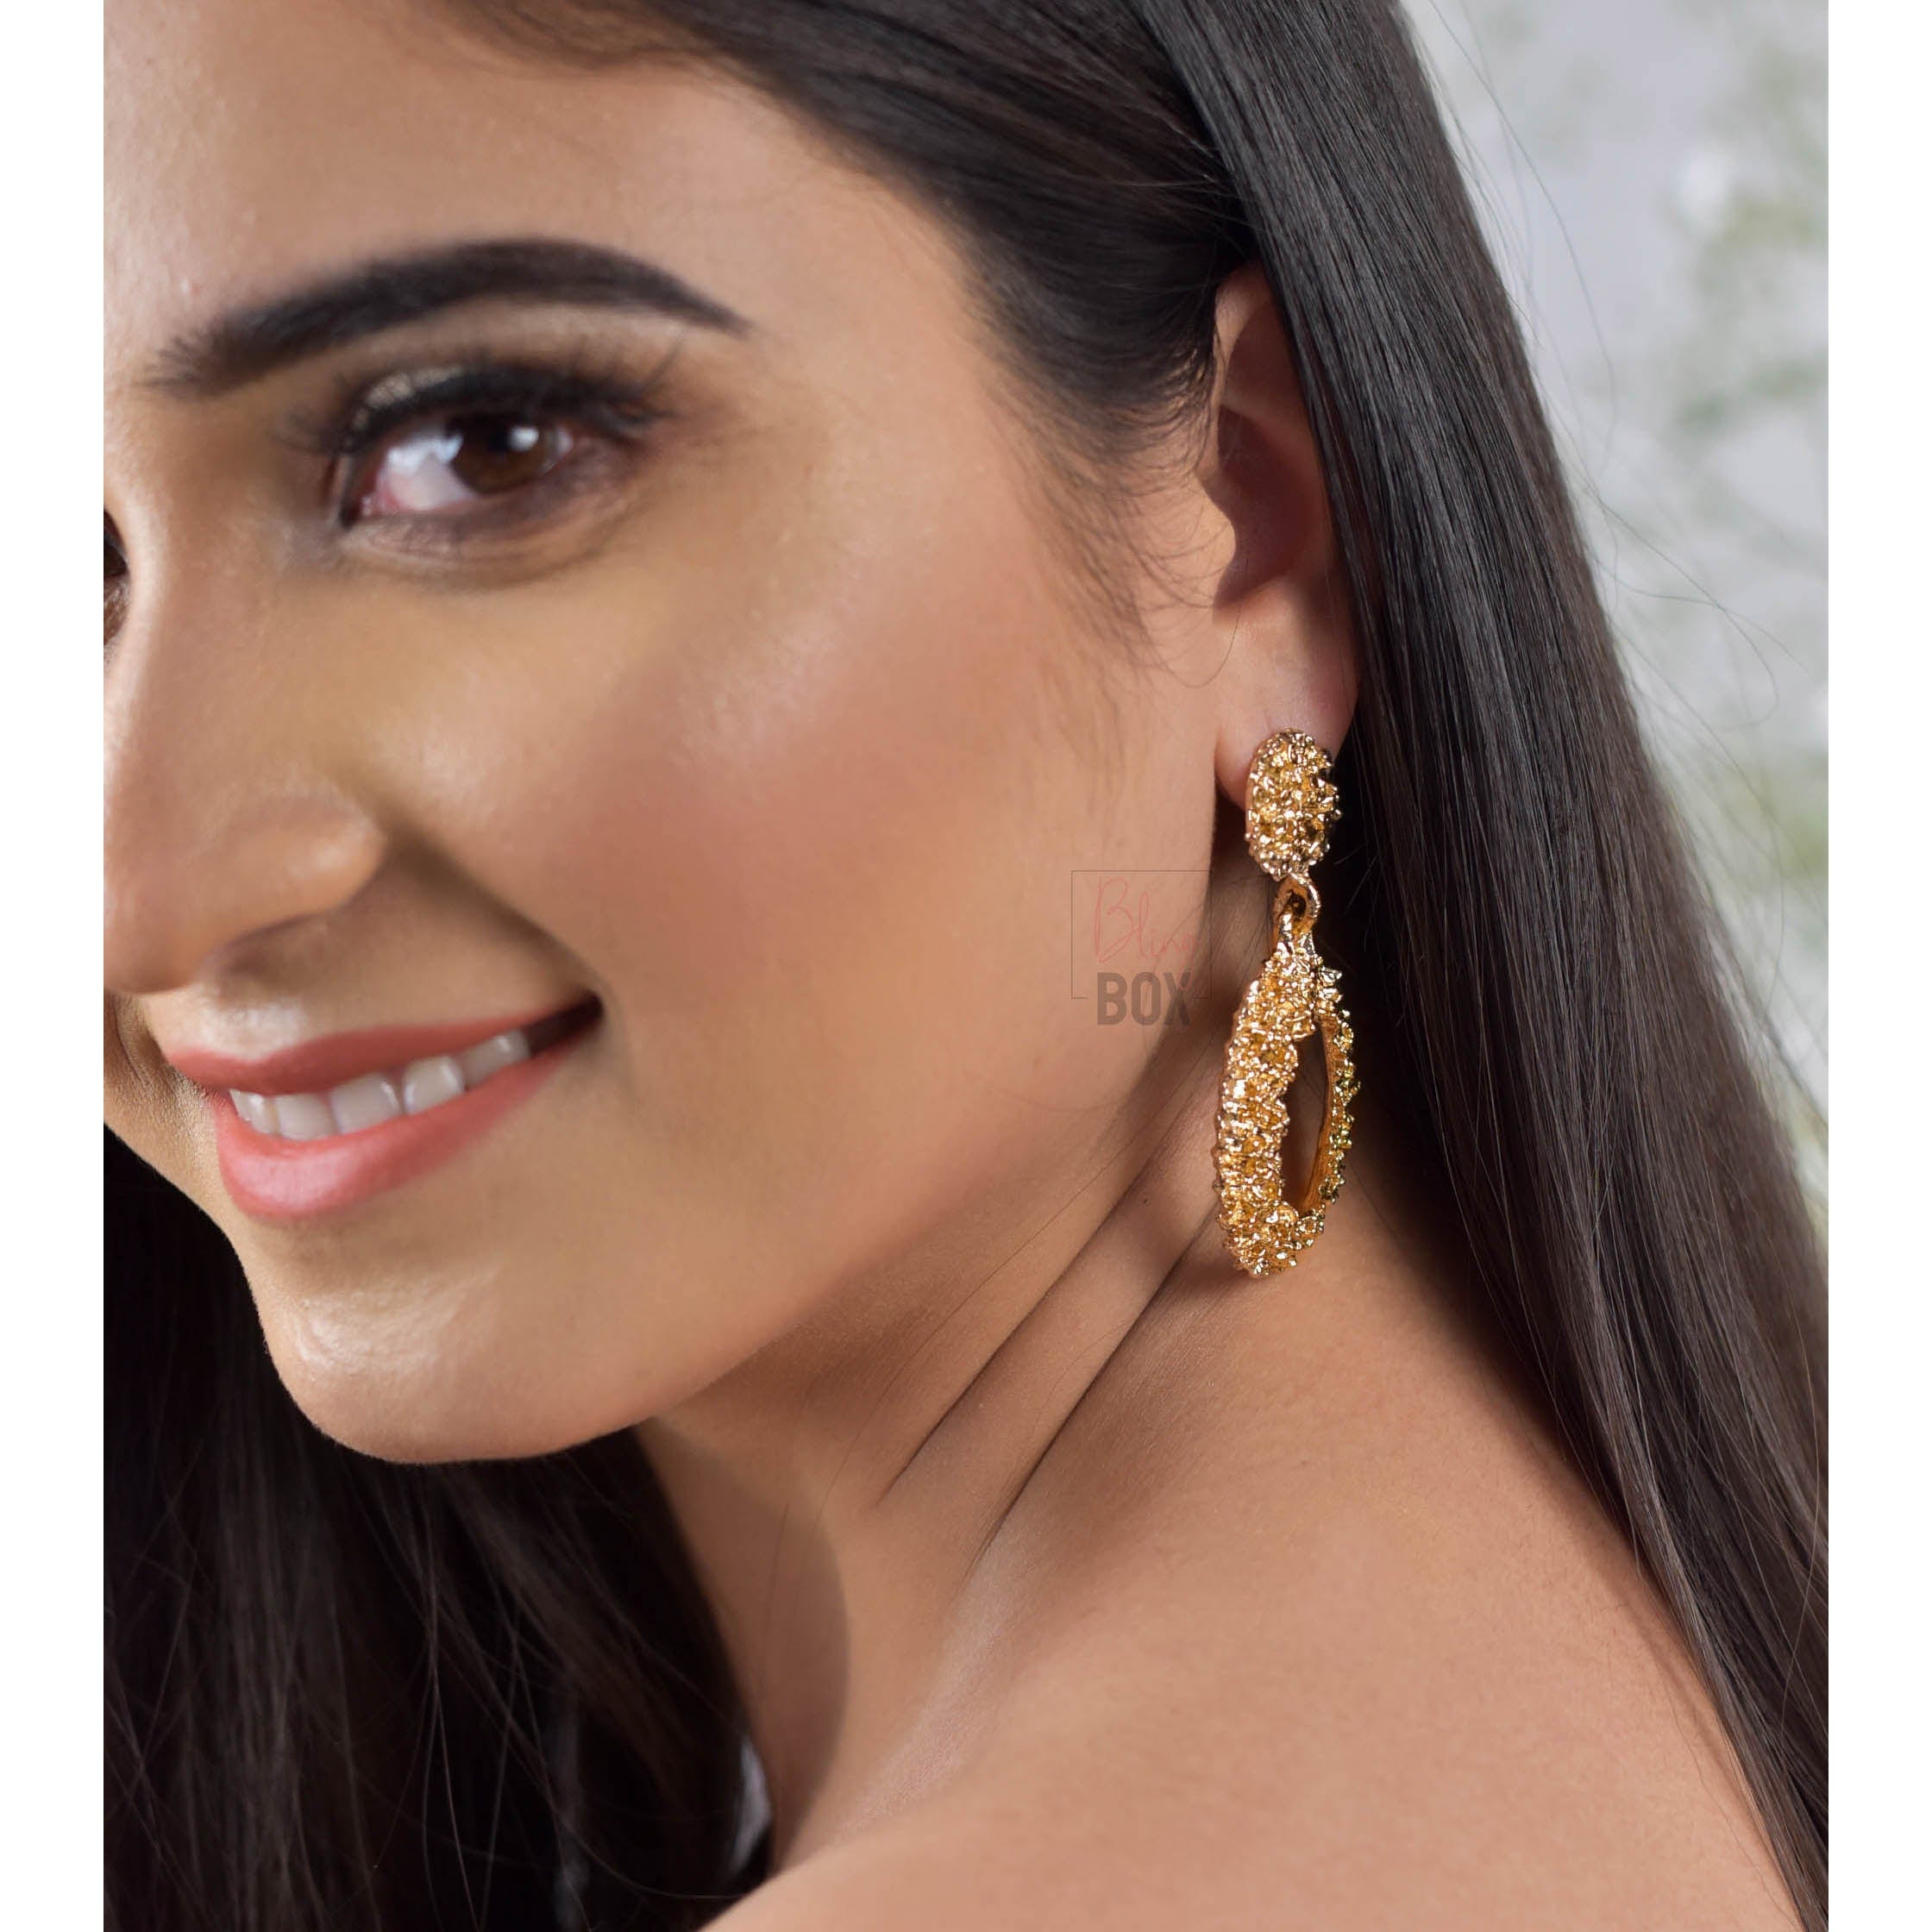 Western Earrings - Buy Western Earrings online in India